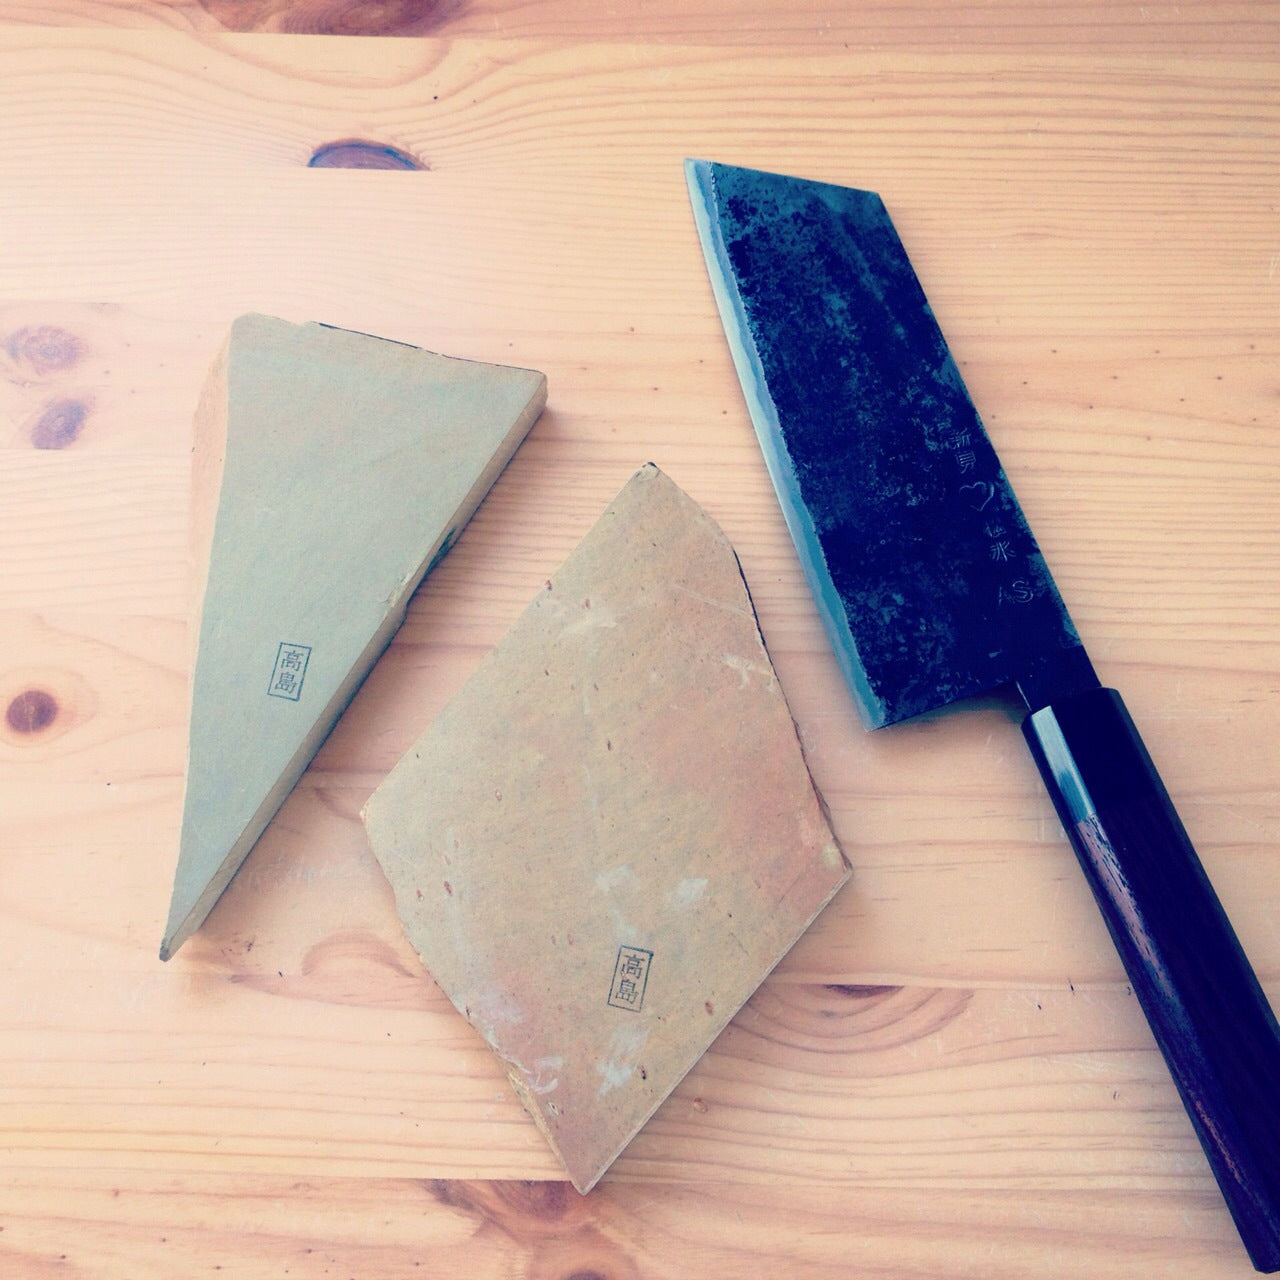 Japanese Sharpening Stone Whetstone Knife Sharpening Angle Guide